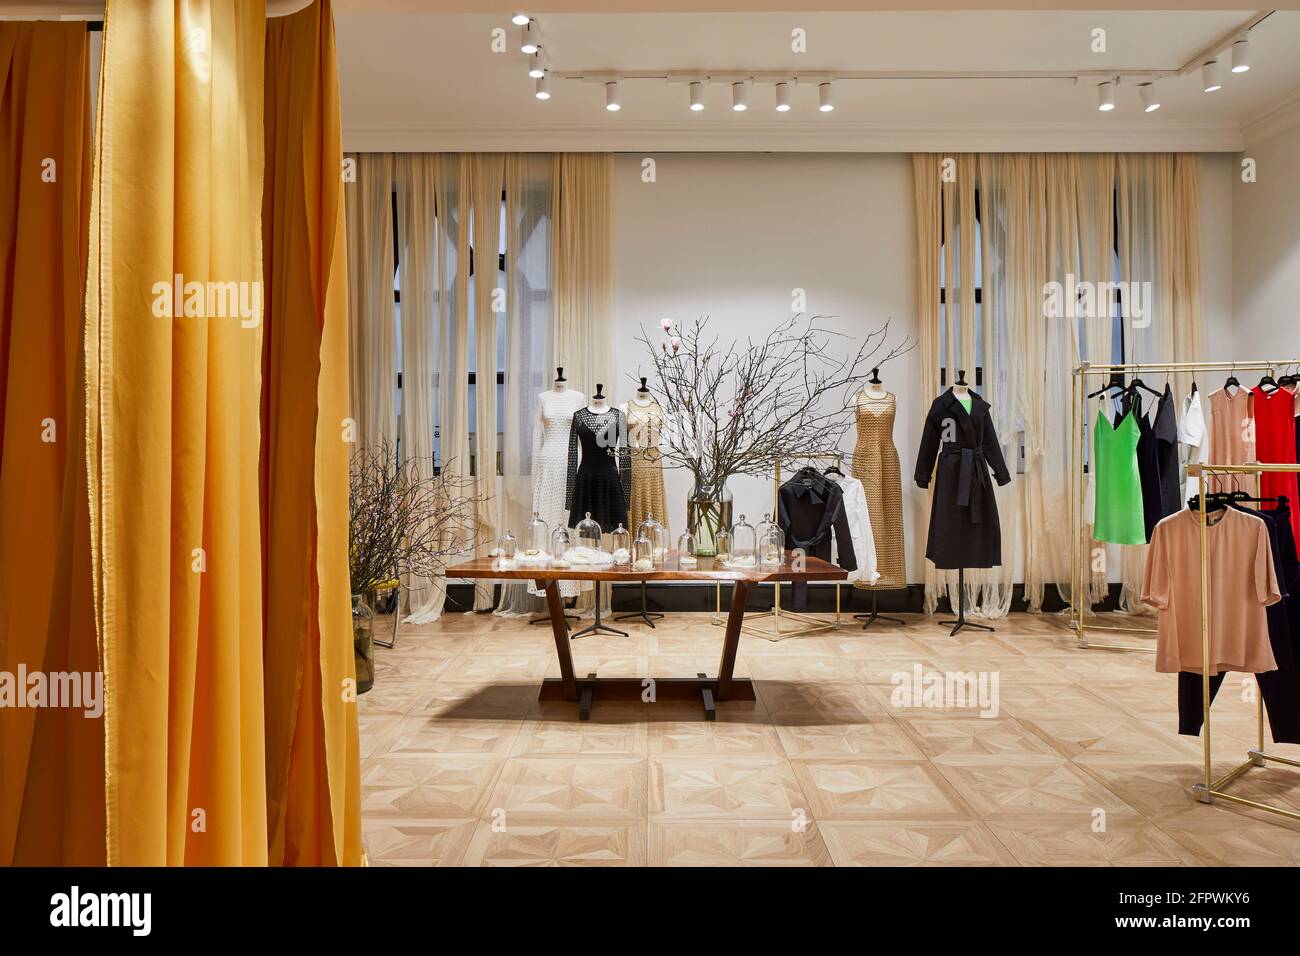 Store interior. Maison Rabih Kayrouz Boutique, London, United Kingdom. Architect: n/a, 2020. Stock Photo